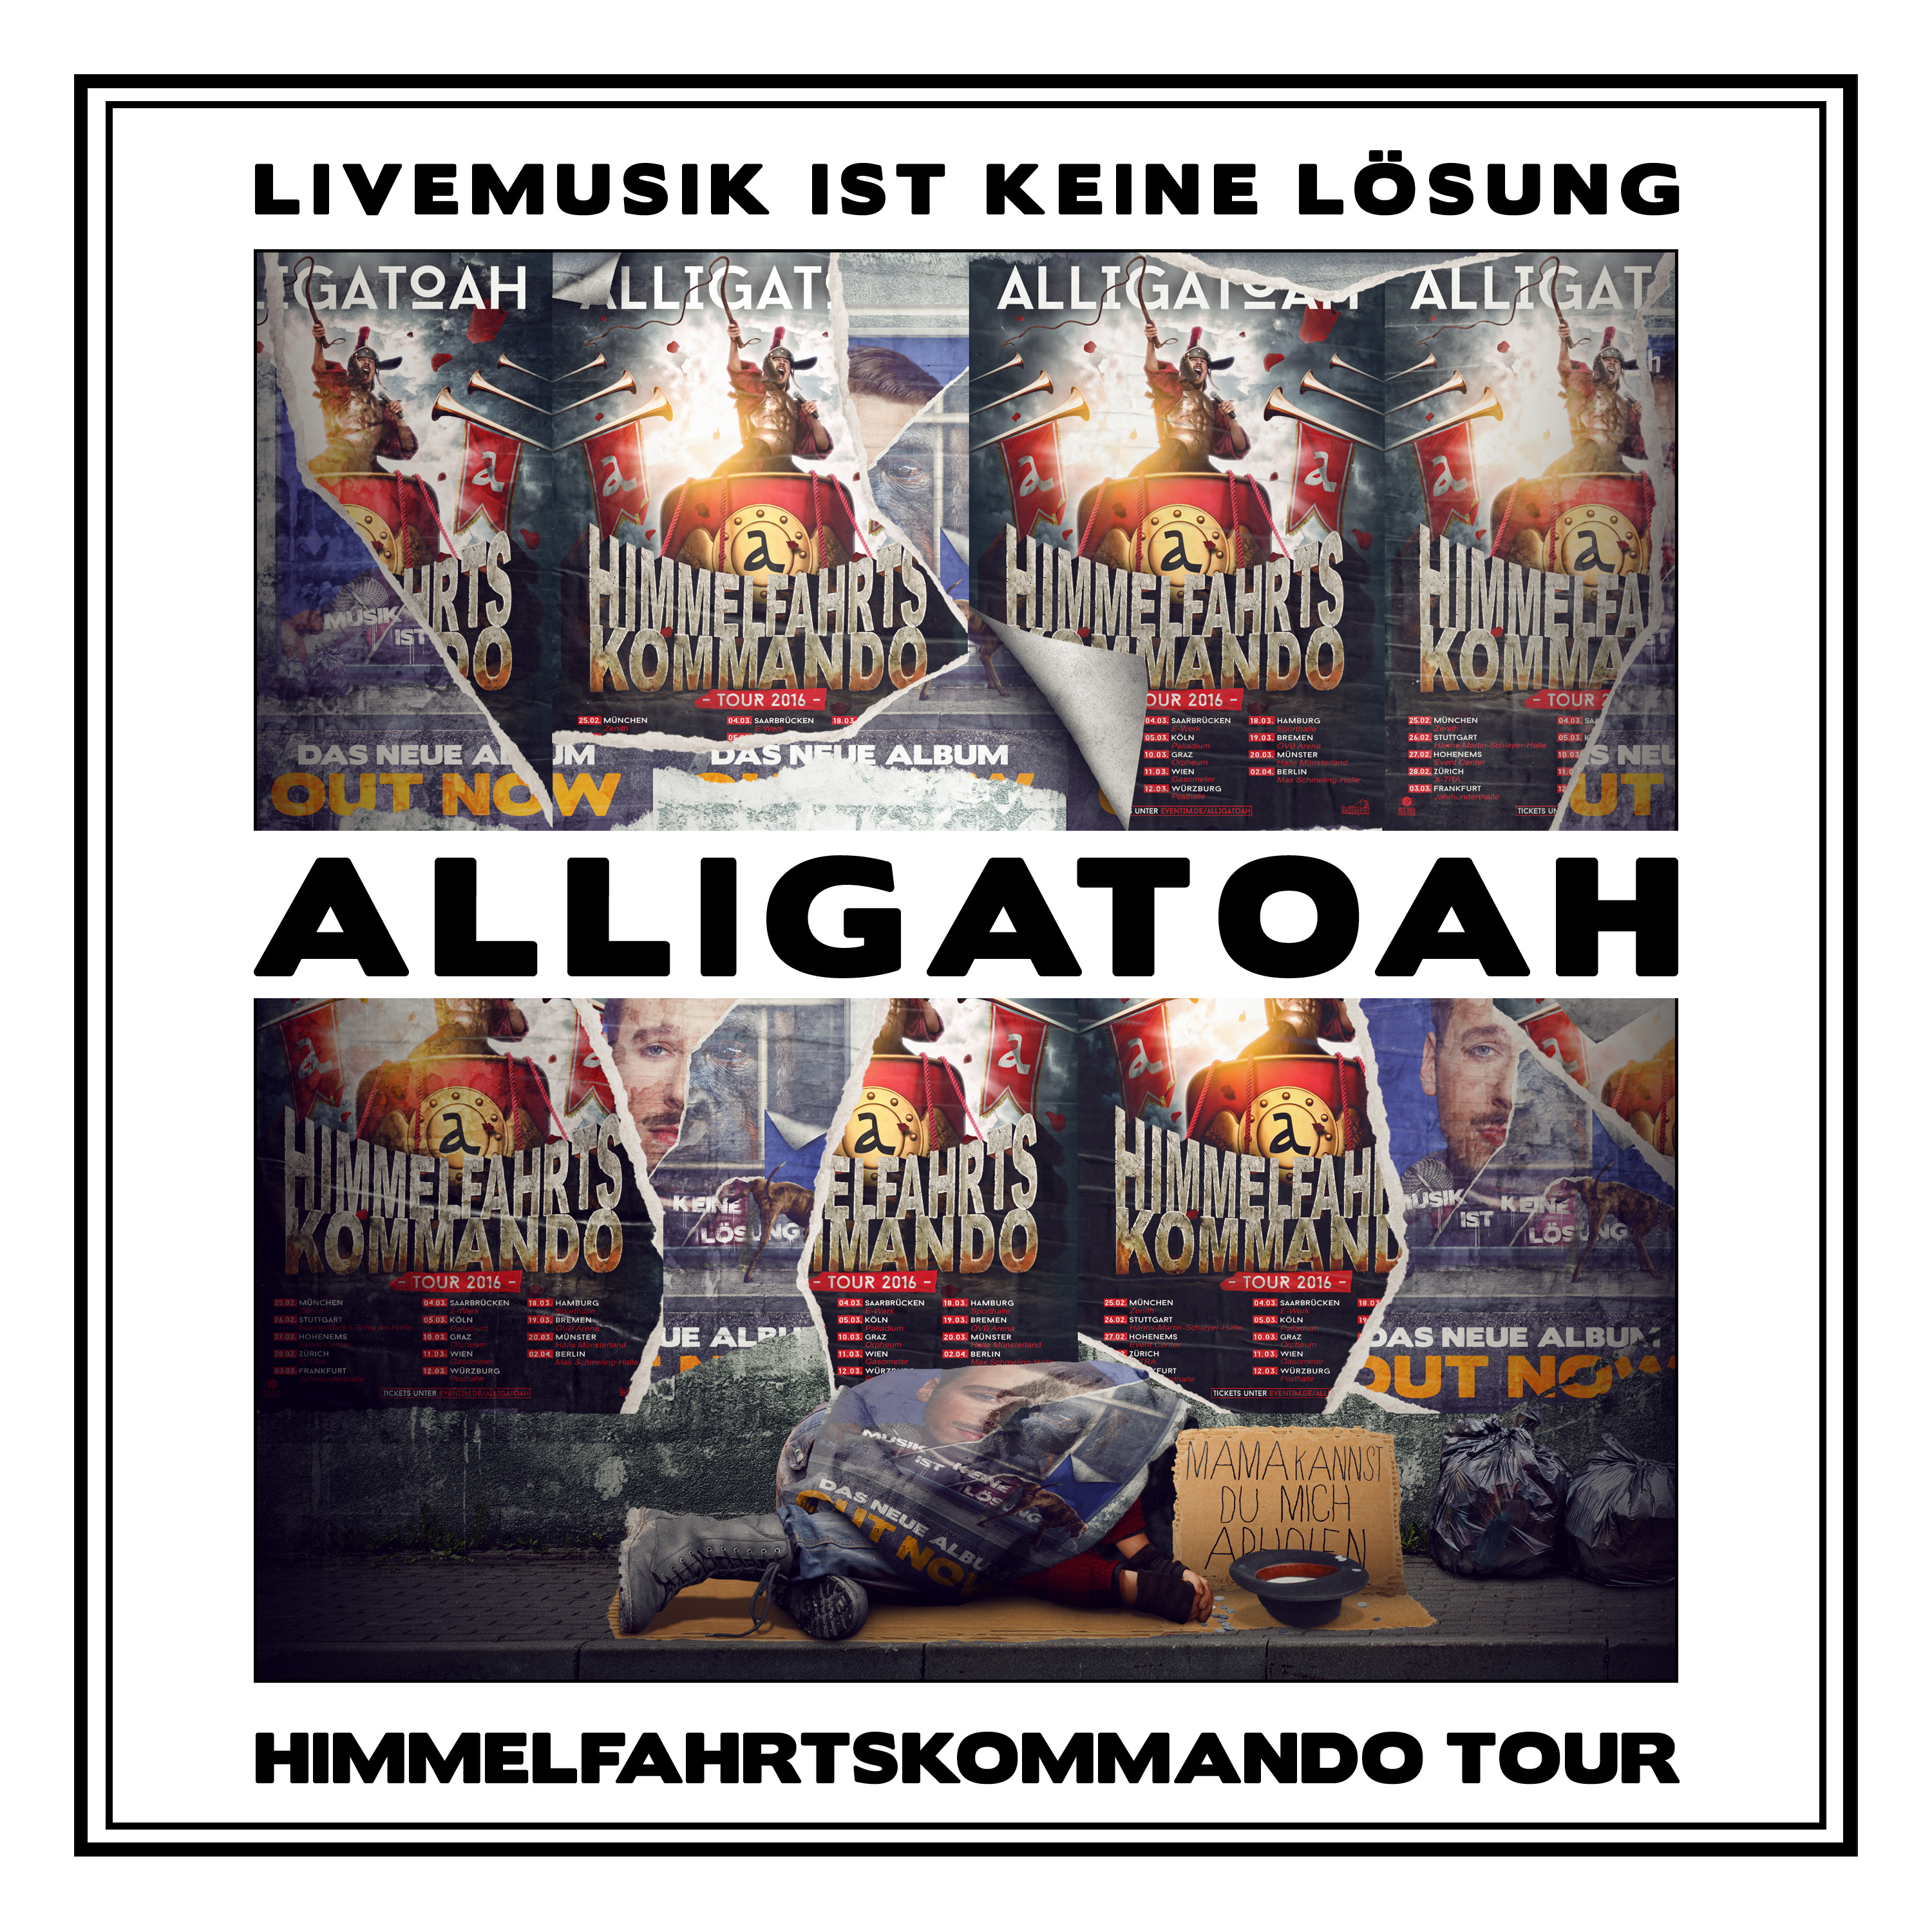 + Alligatoah Tour - Ist Himmelfahrtskommando Alligatoah (CD Video) Keine Livemusik - Lösung (Ltd. - (3CD+DVD+T-Shirt) Fanbox) - DVD